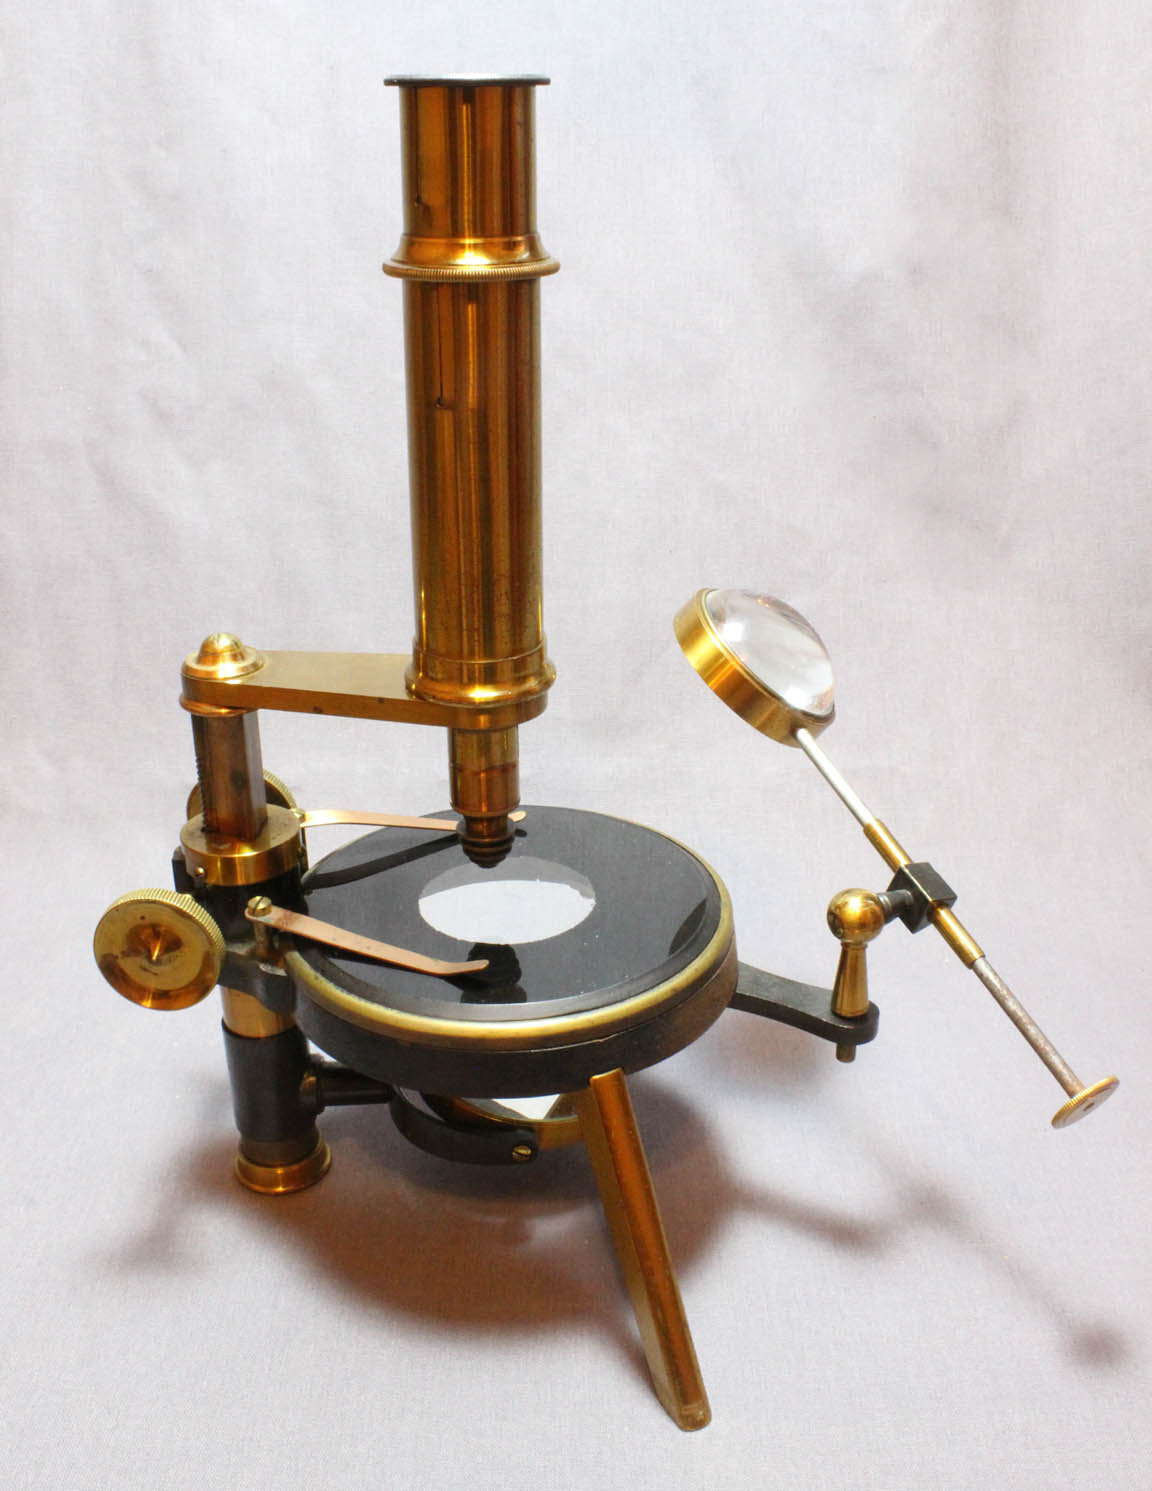 Huxley microscope